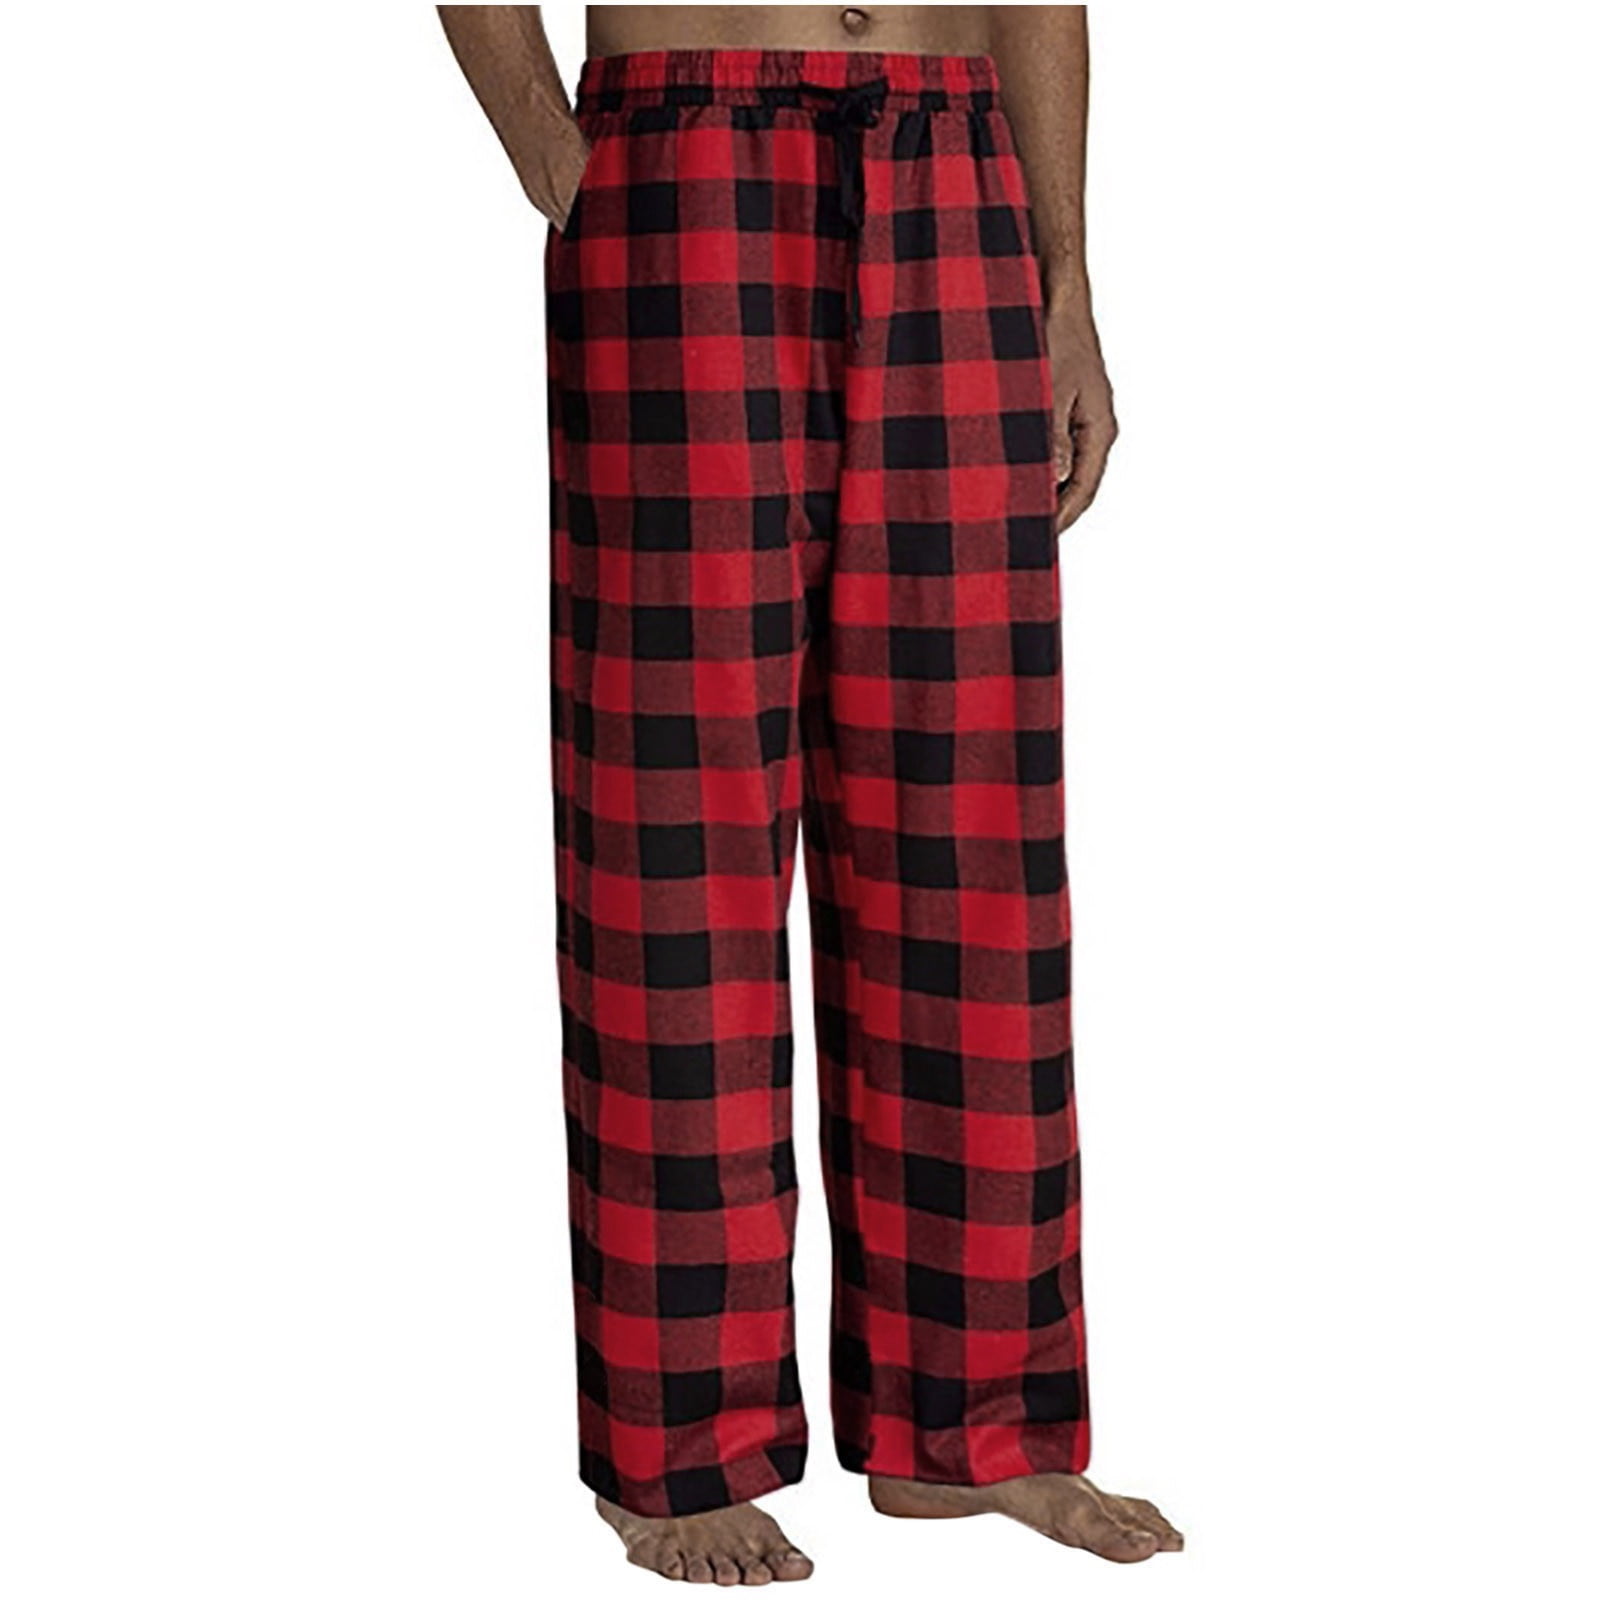 Clearance Mens Pajama Pants Plaid Lounge Sleepwear PJs Bottoms Pants ...